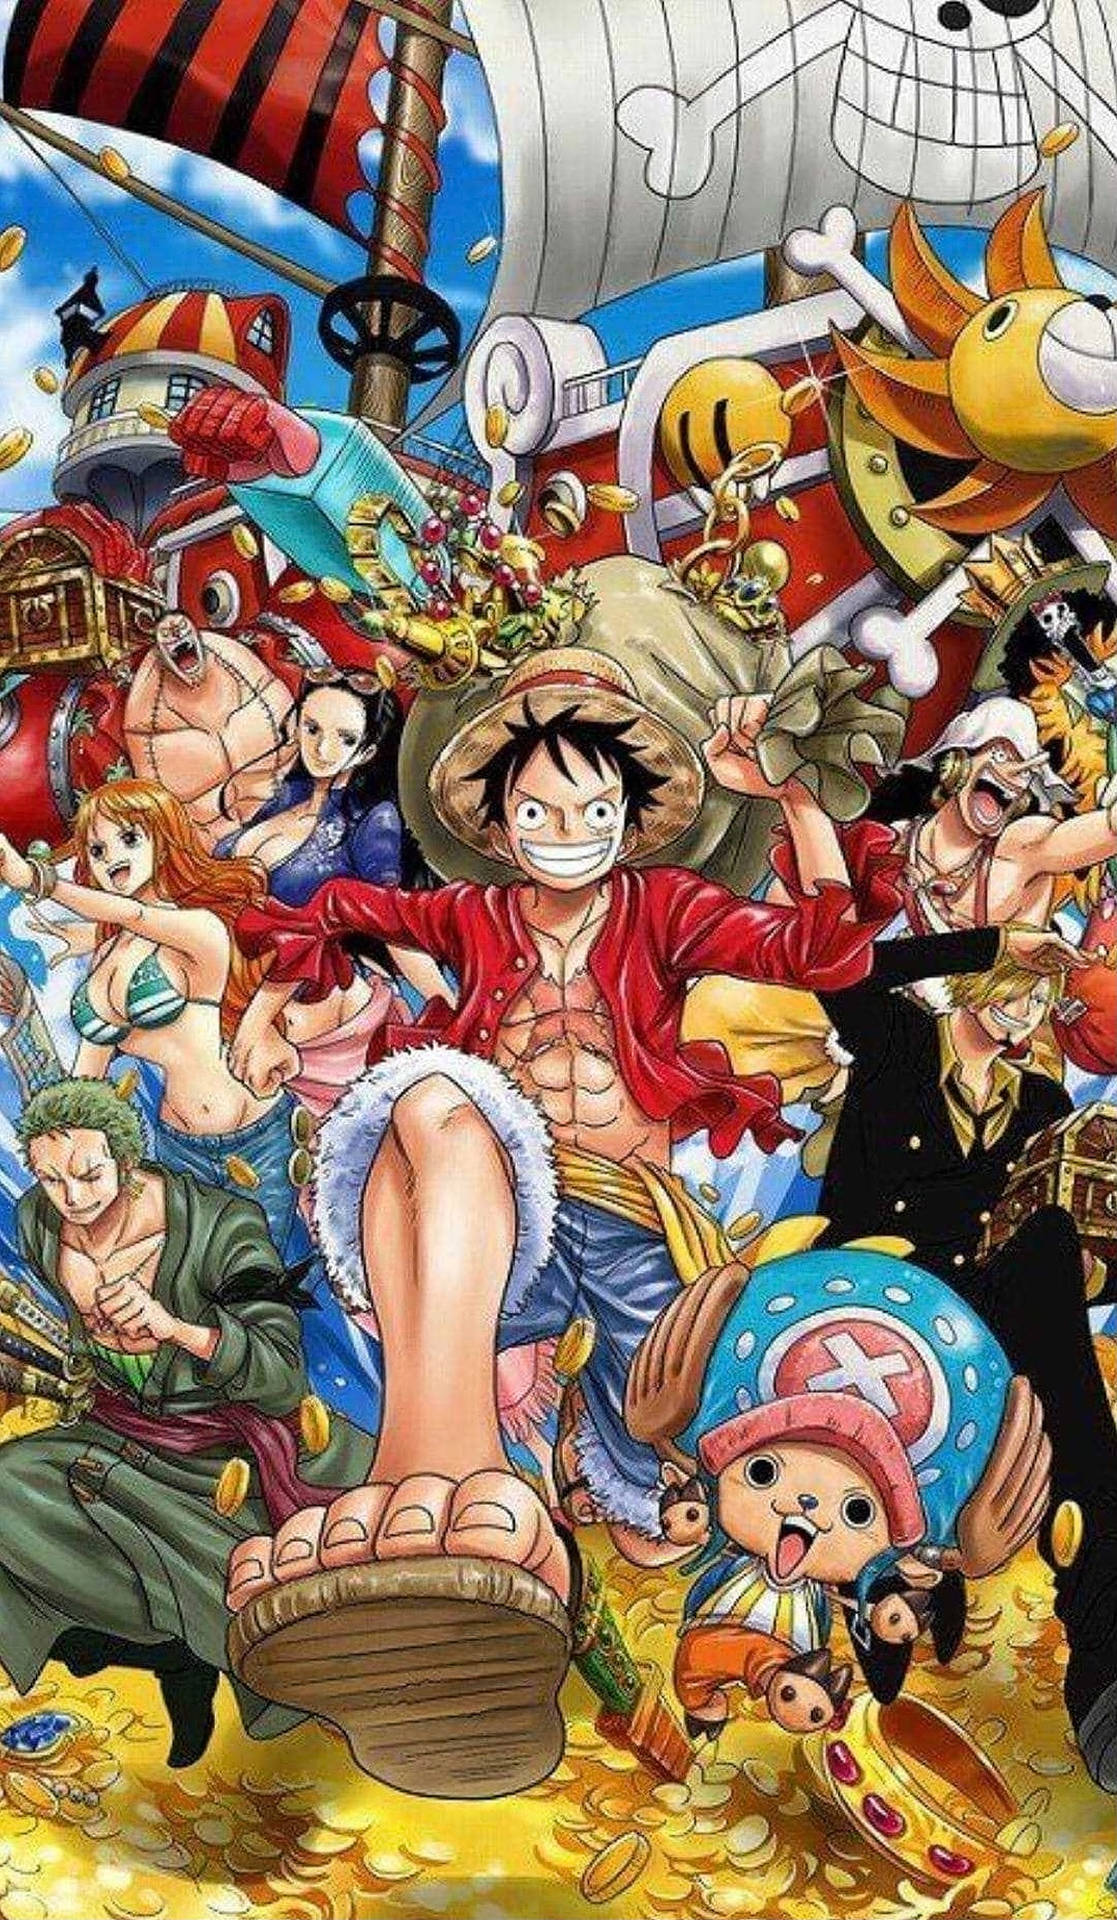 Anime One Piece 4k Ultra HD Wallpaper by JabamiSora